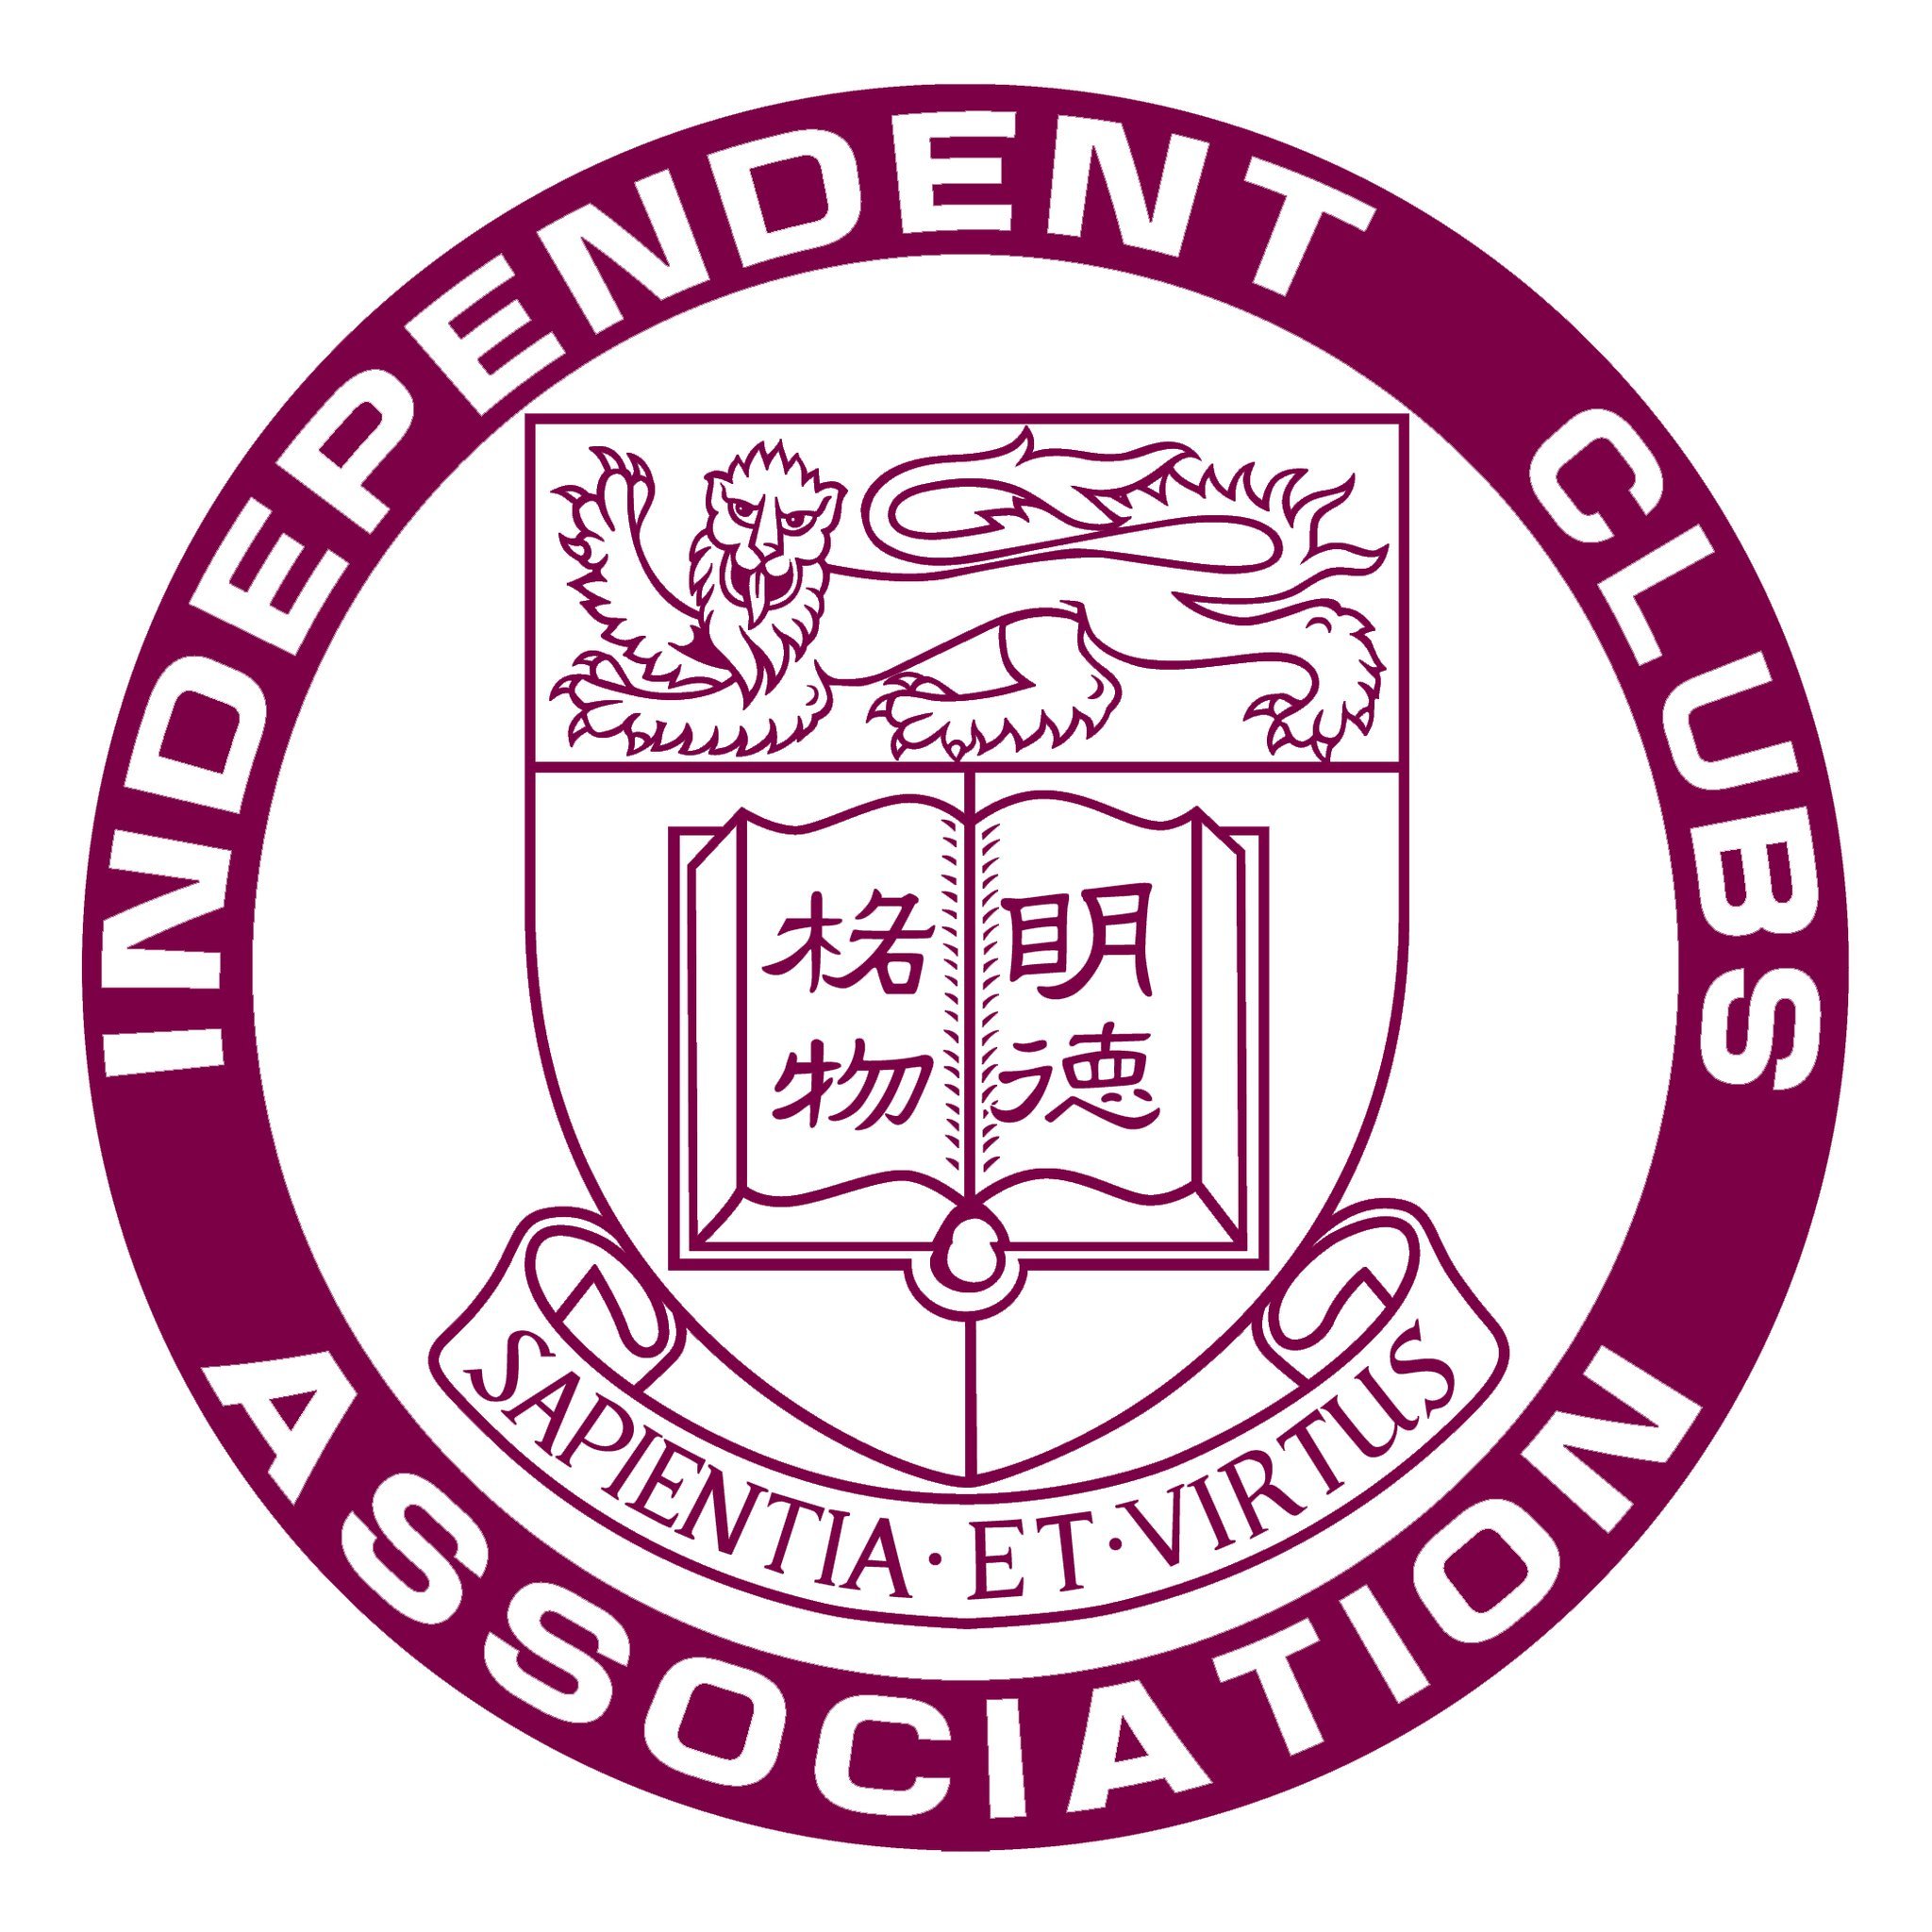 Independent Clubs Association, HKU